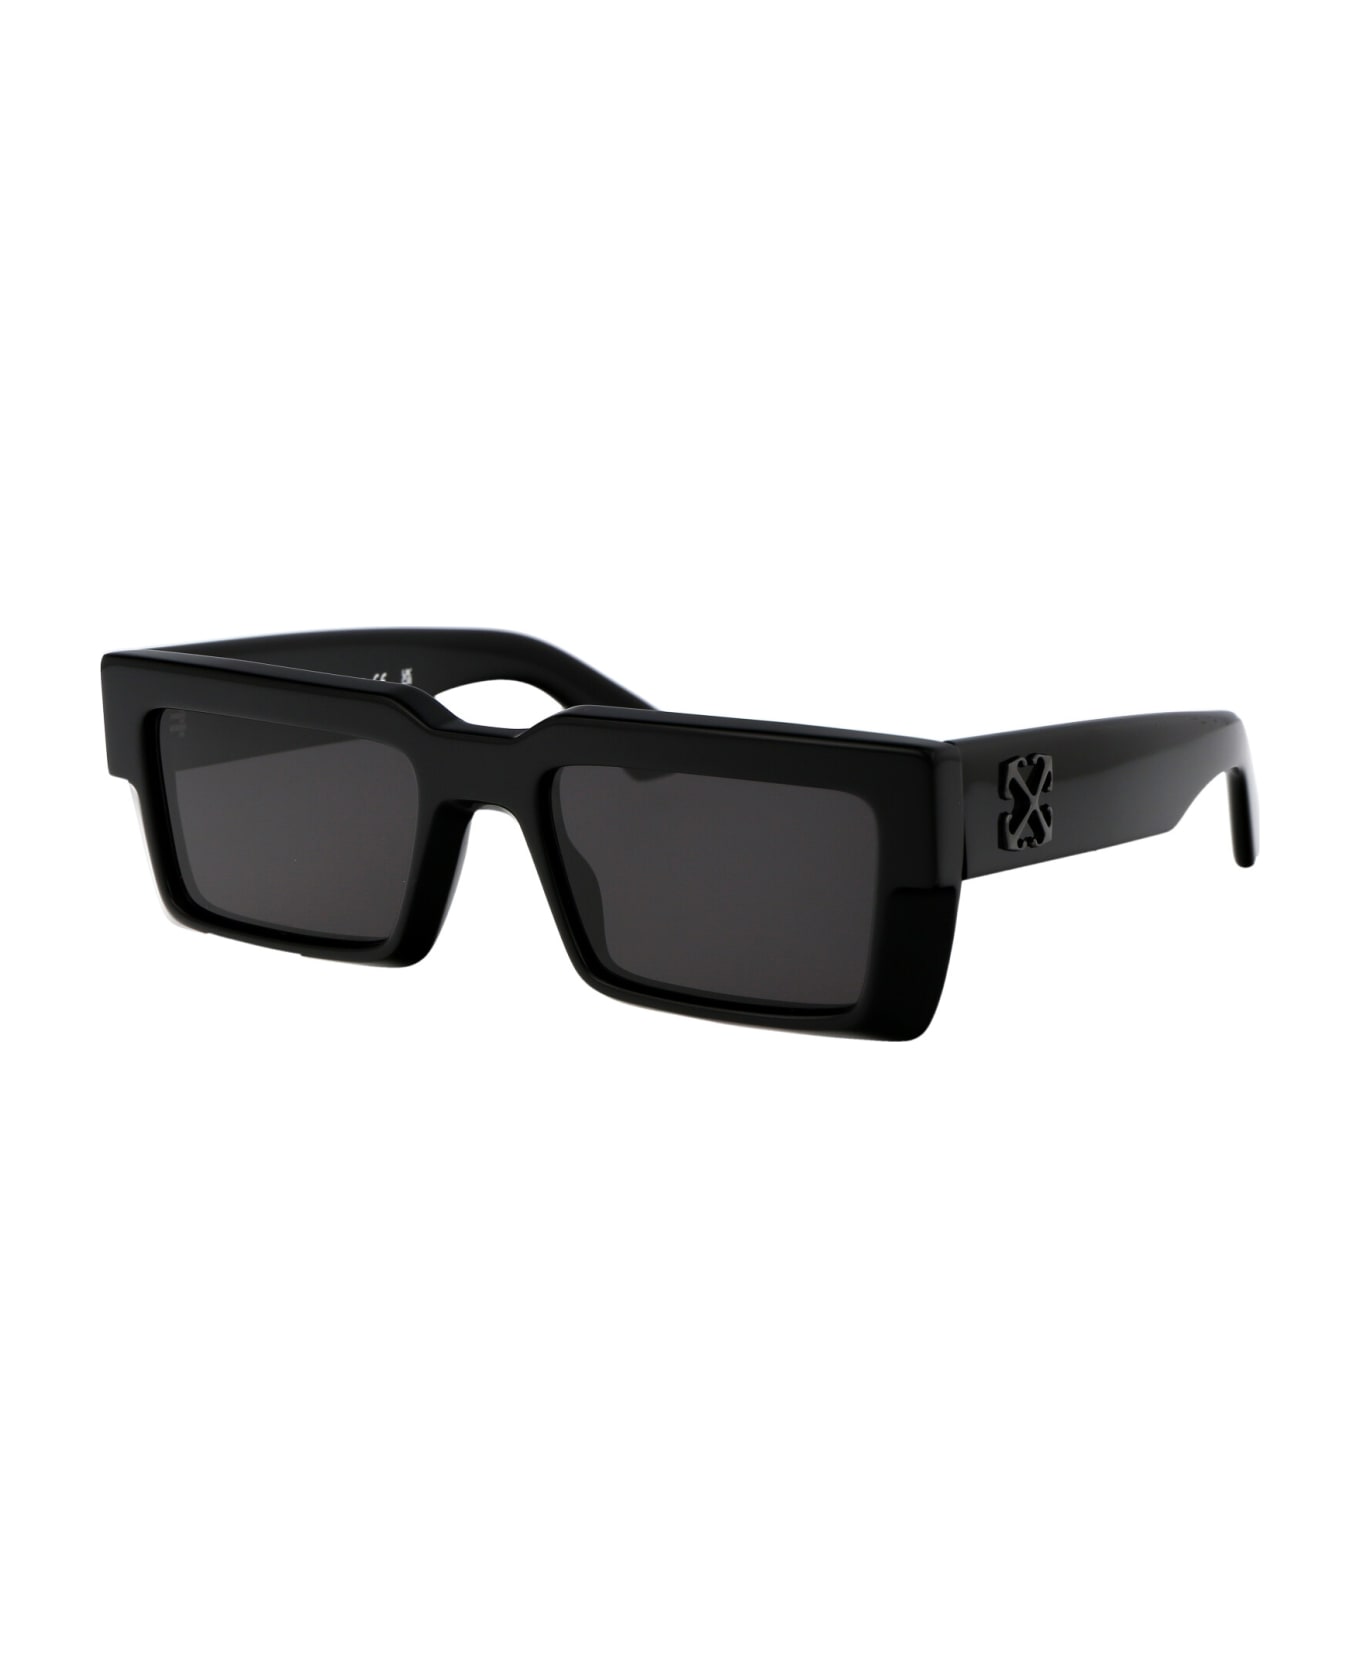 Off-White Moberly Sunglasses - 1007 BLACK サングラス